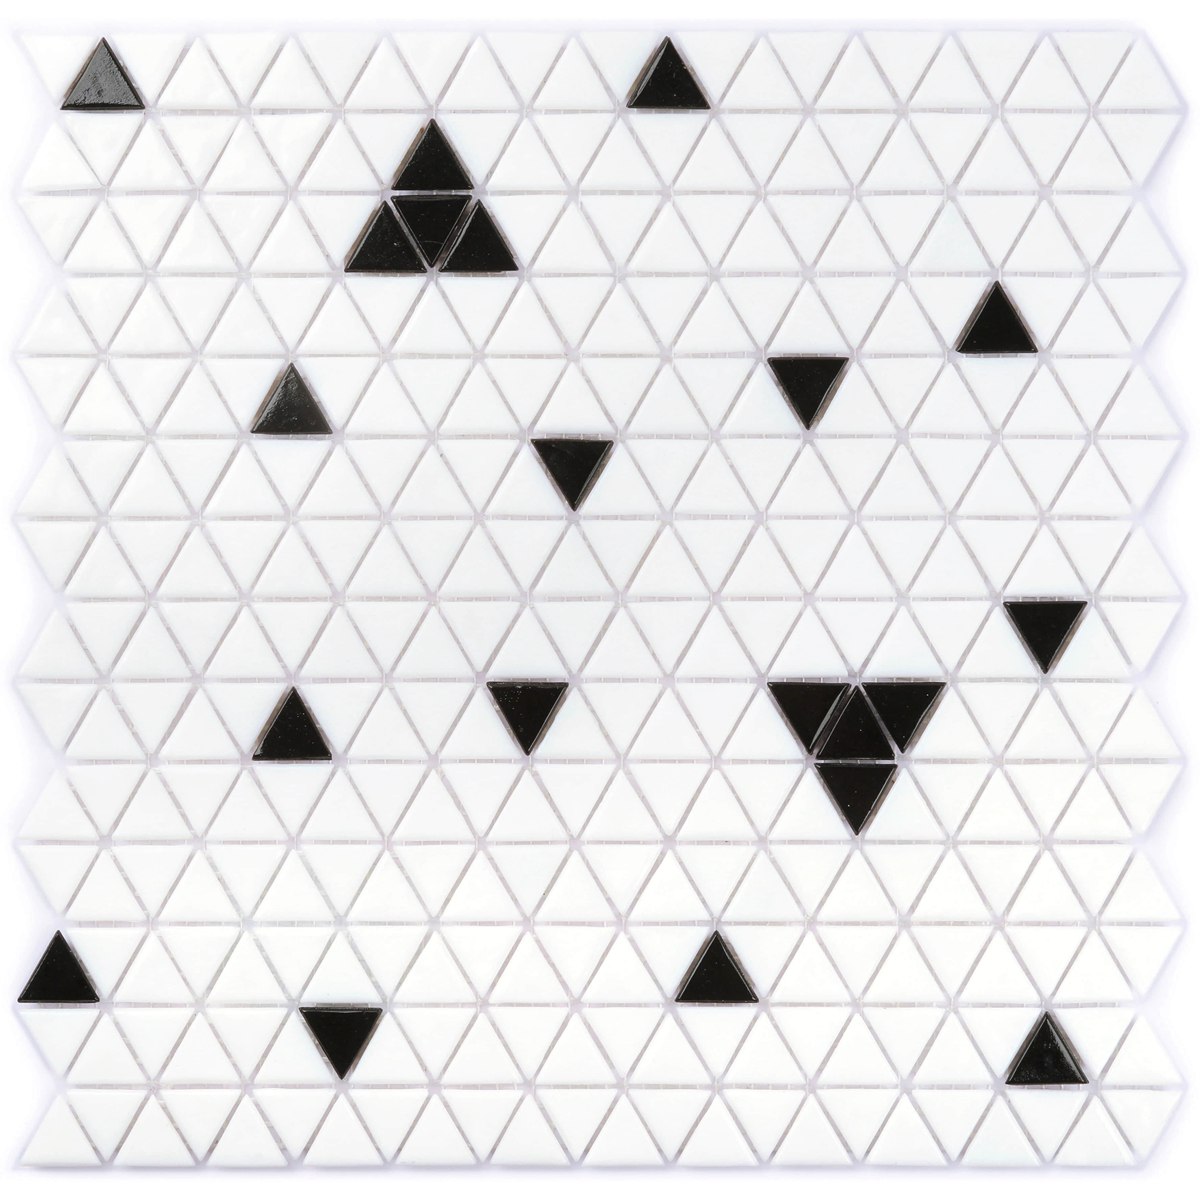 Mosic floor tiles geometric pattern